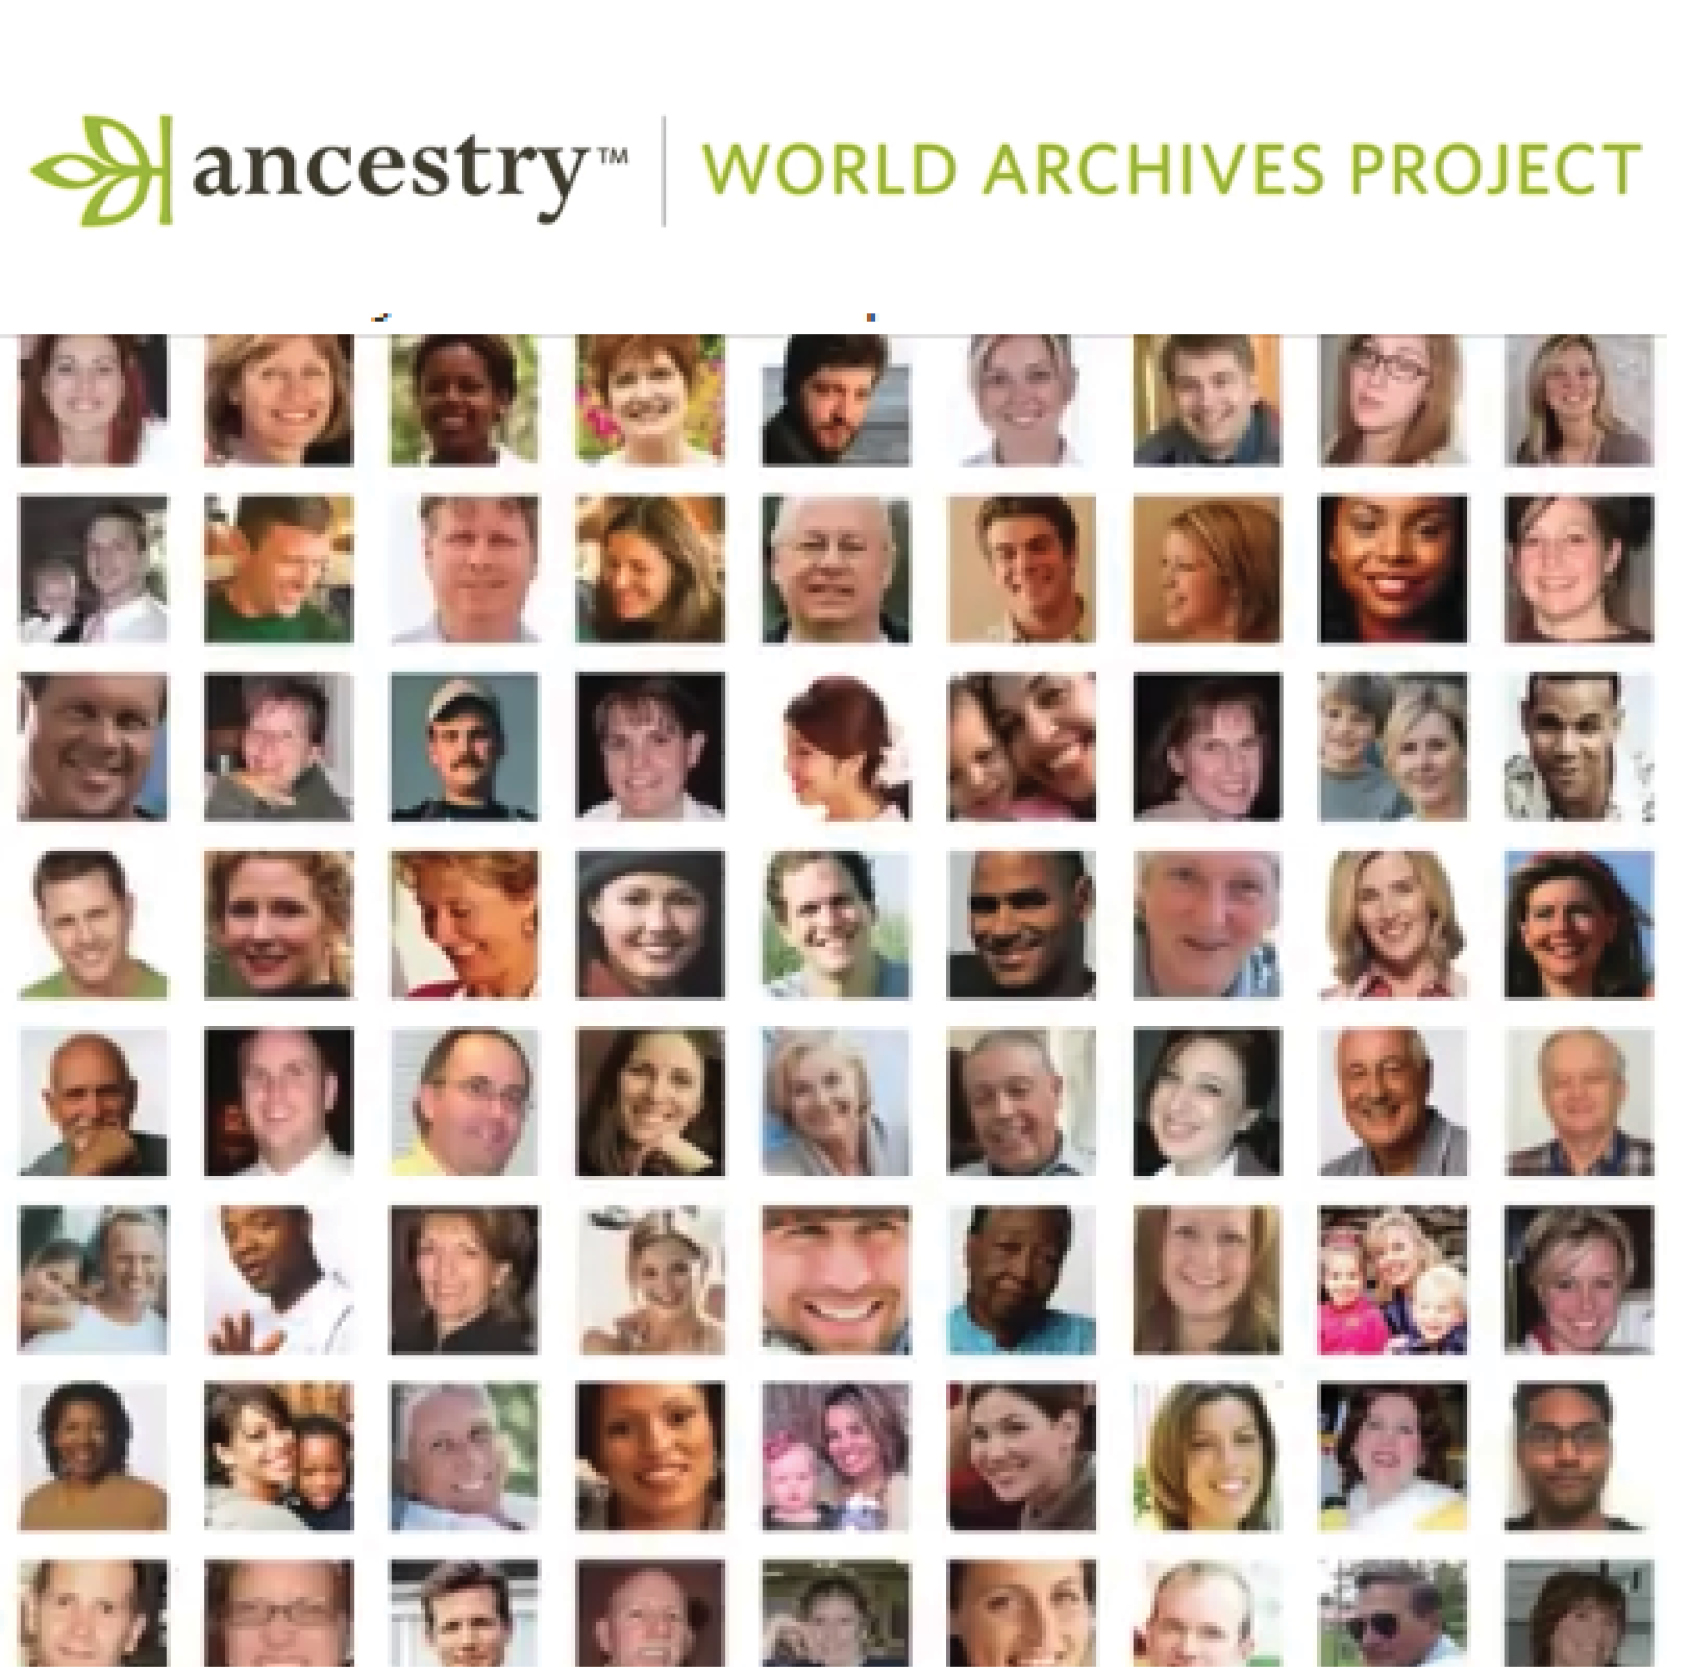 ancestry world explorer membership review